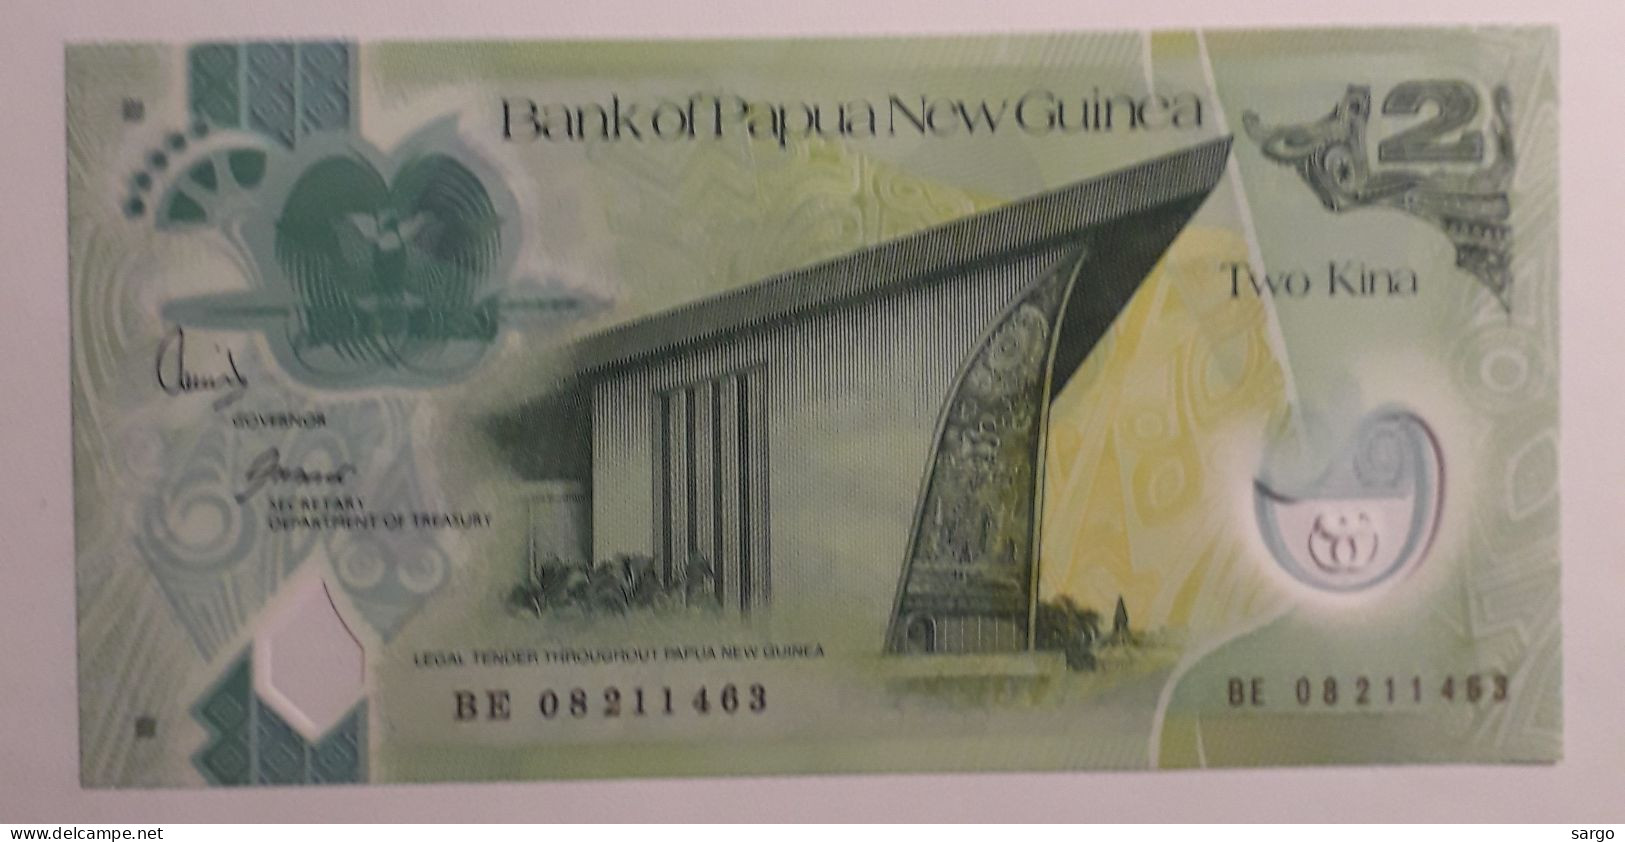 PAPUA NEW GUINEA - 2 KINA - 2007-2014 - UNCIRC P 38 - POLYMER - BANKNOTES - PAPER MONEY - CARTAMONETA - - Papua-Neuguinea